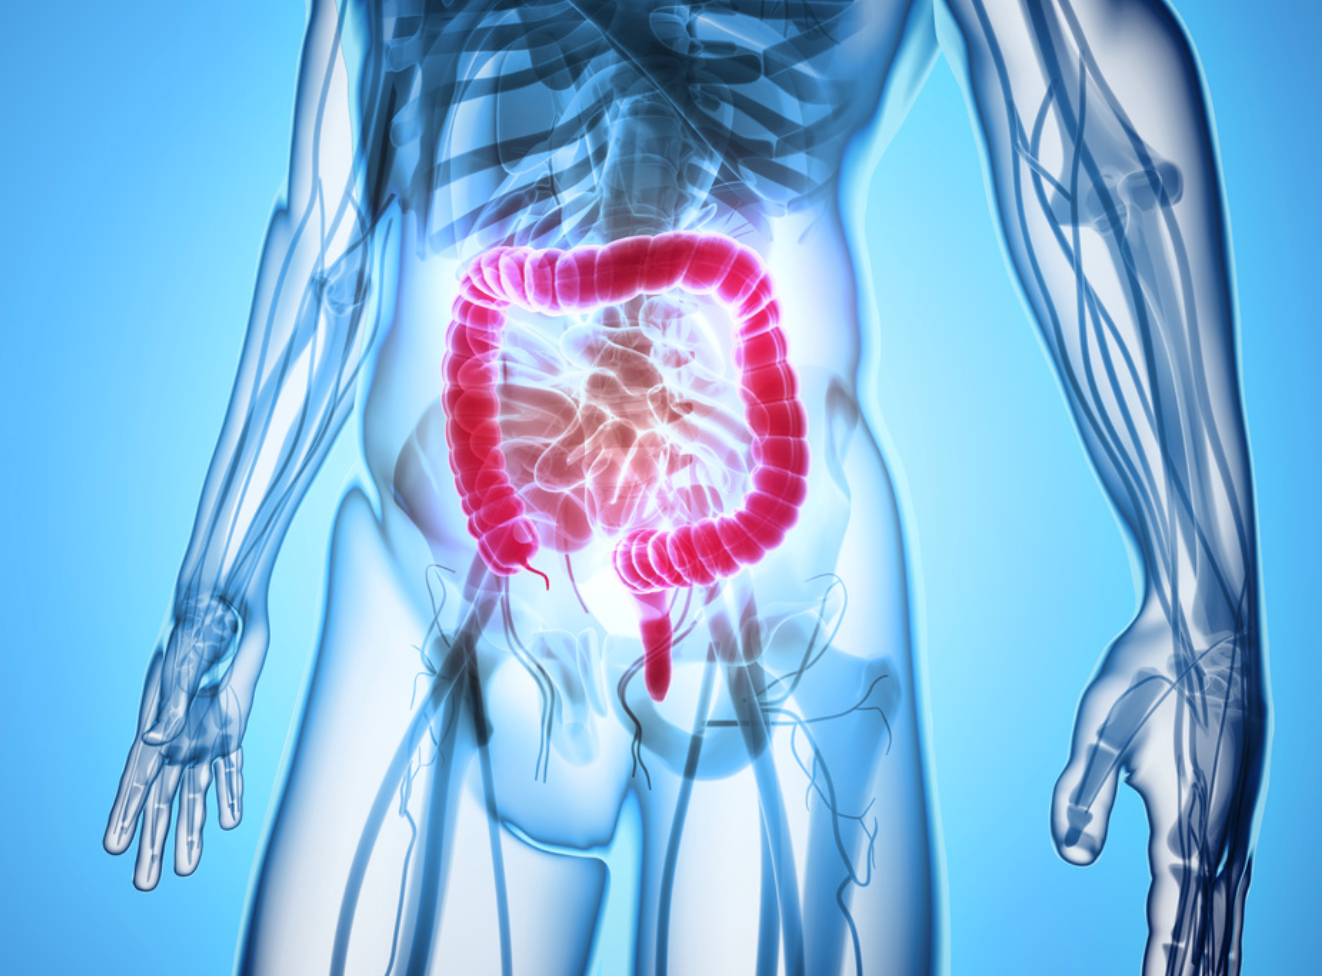 Case Study Examines Biosimilar for Crohn Disease Treatment